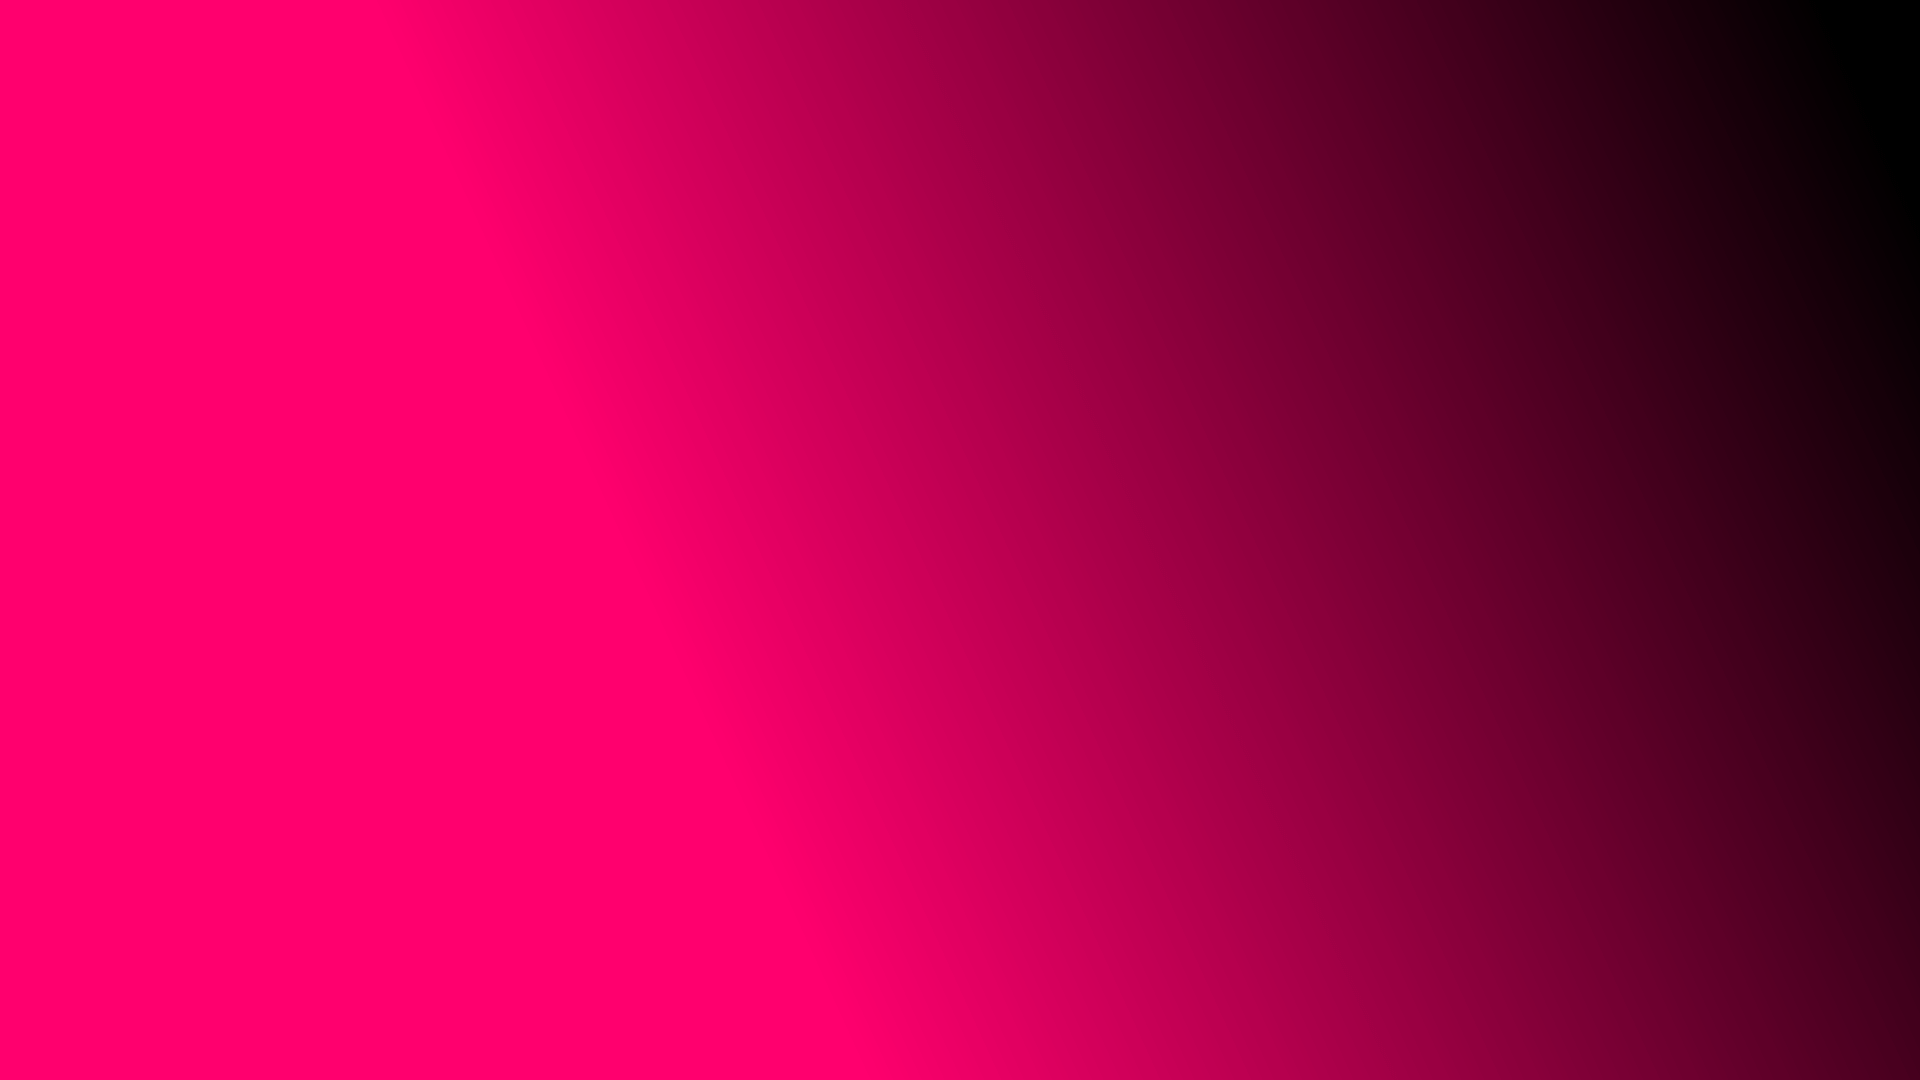 Pink Background 111 Go Go Away